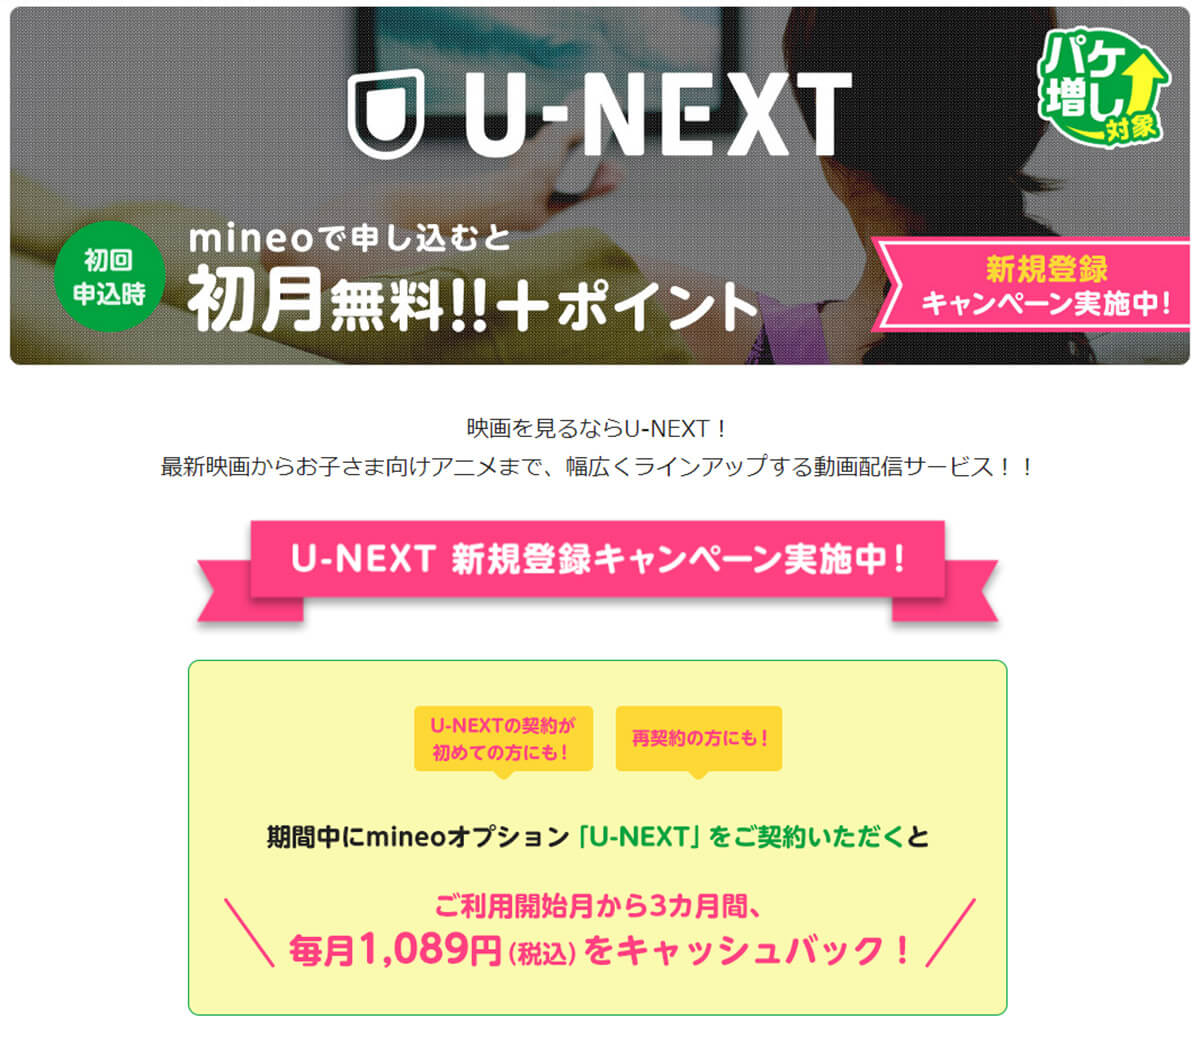 mineoのU-NEXT新規登録キャンペーン